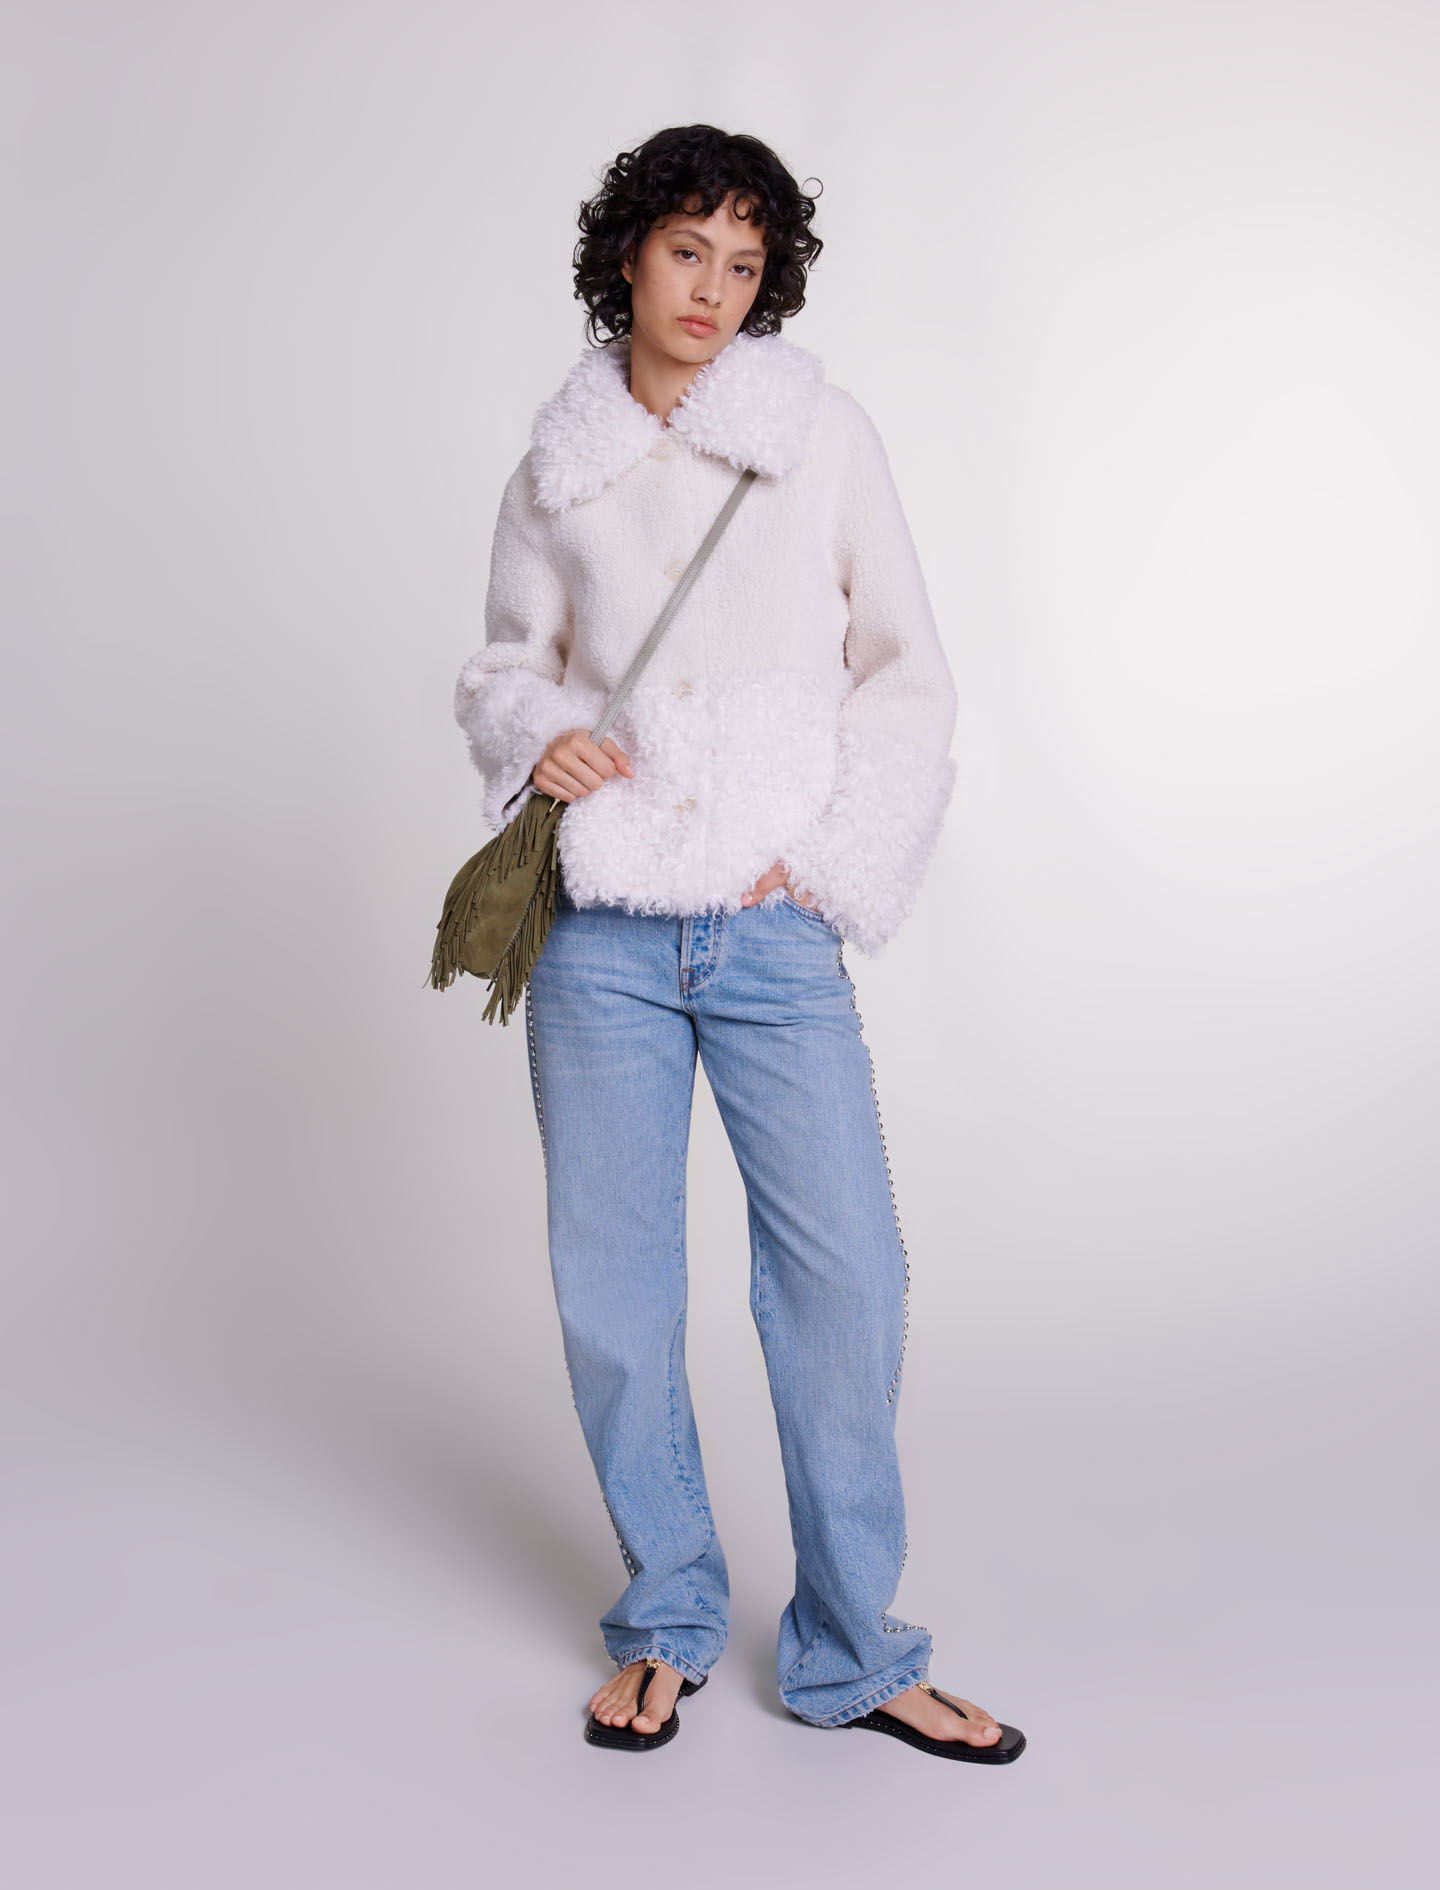 Maje Woman's polyester Lining: Short fake fur coat for Spring/Summer, in color Ecru / Beige